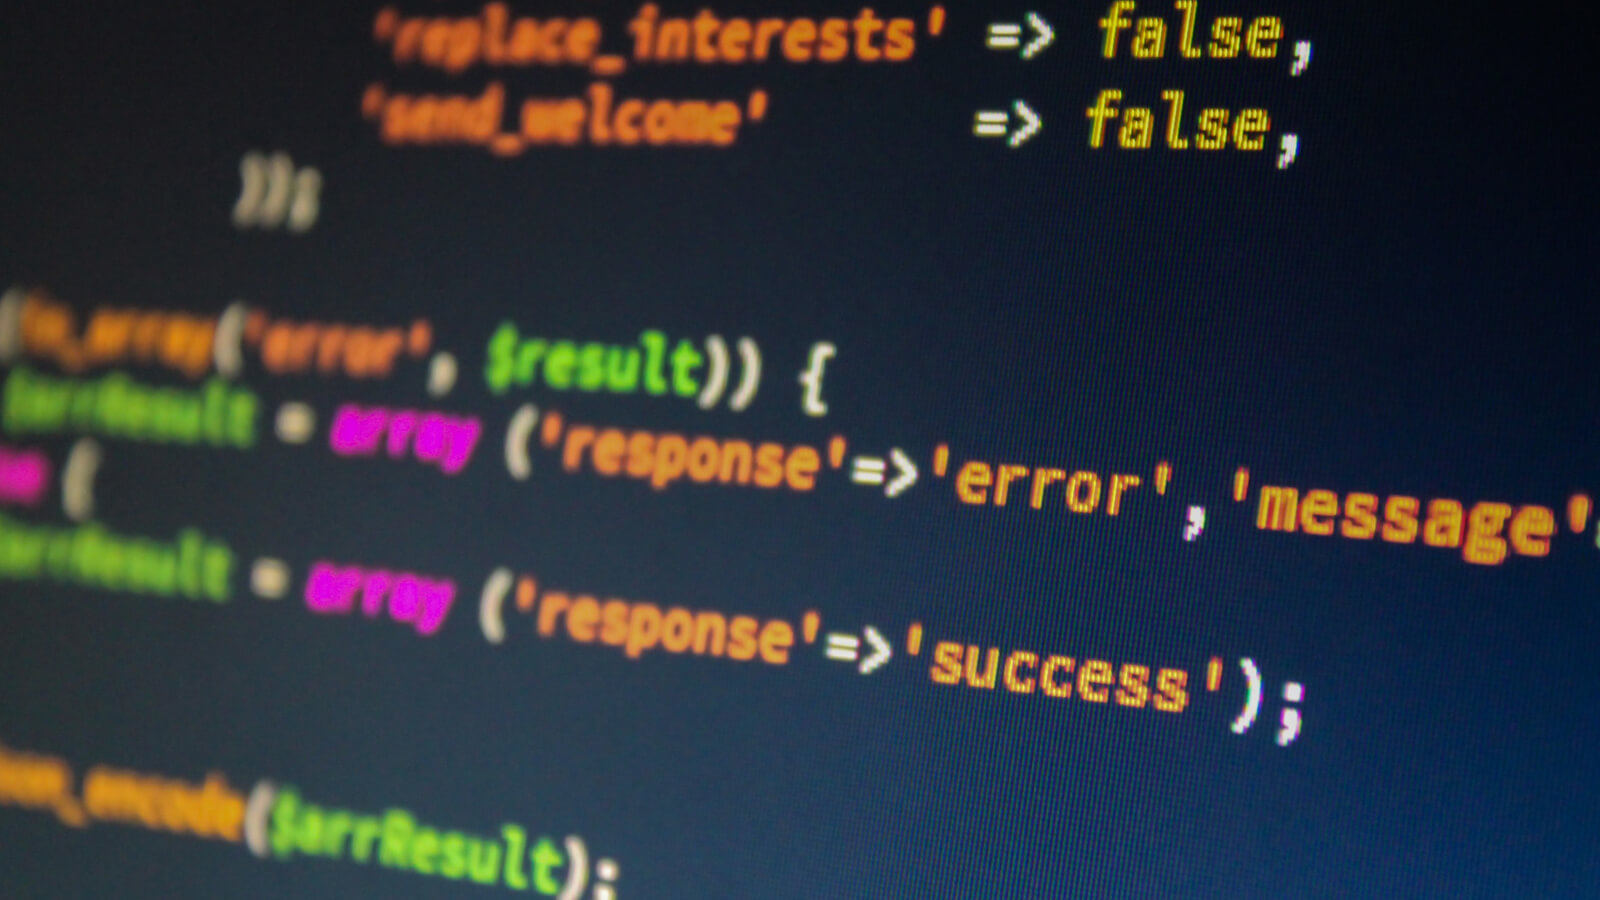 Coding: array, response, error, message, success...